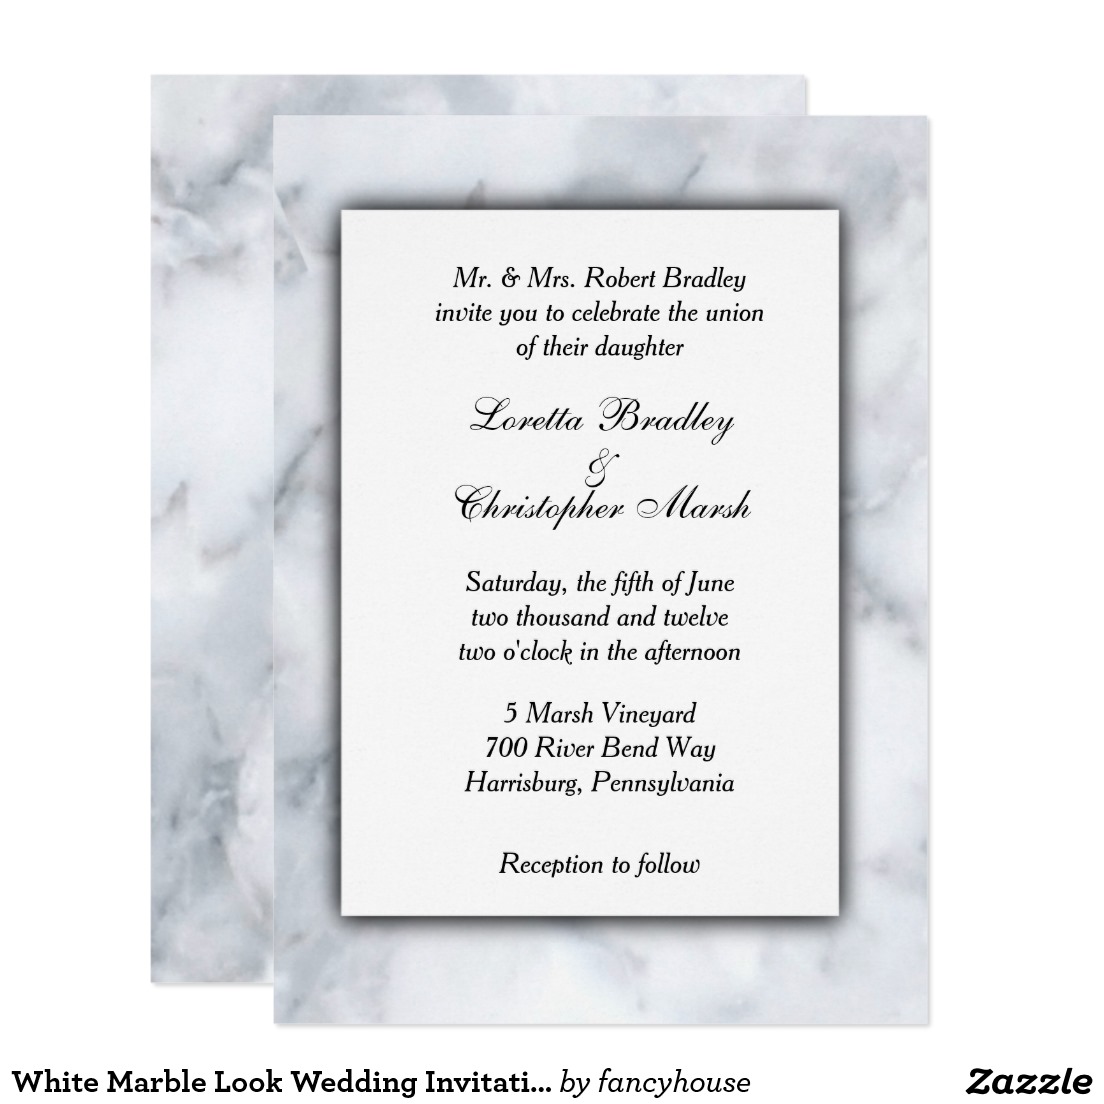 White Marble Look Wedding Invitation